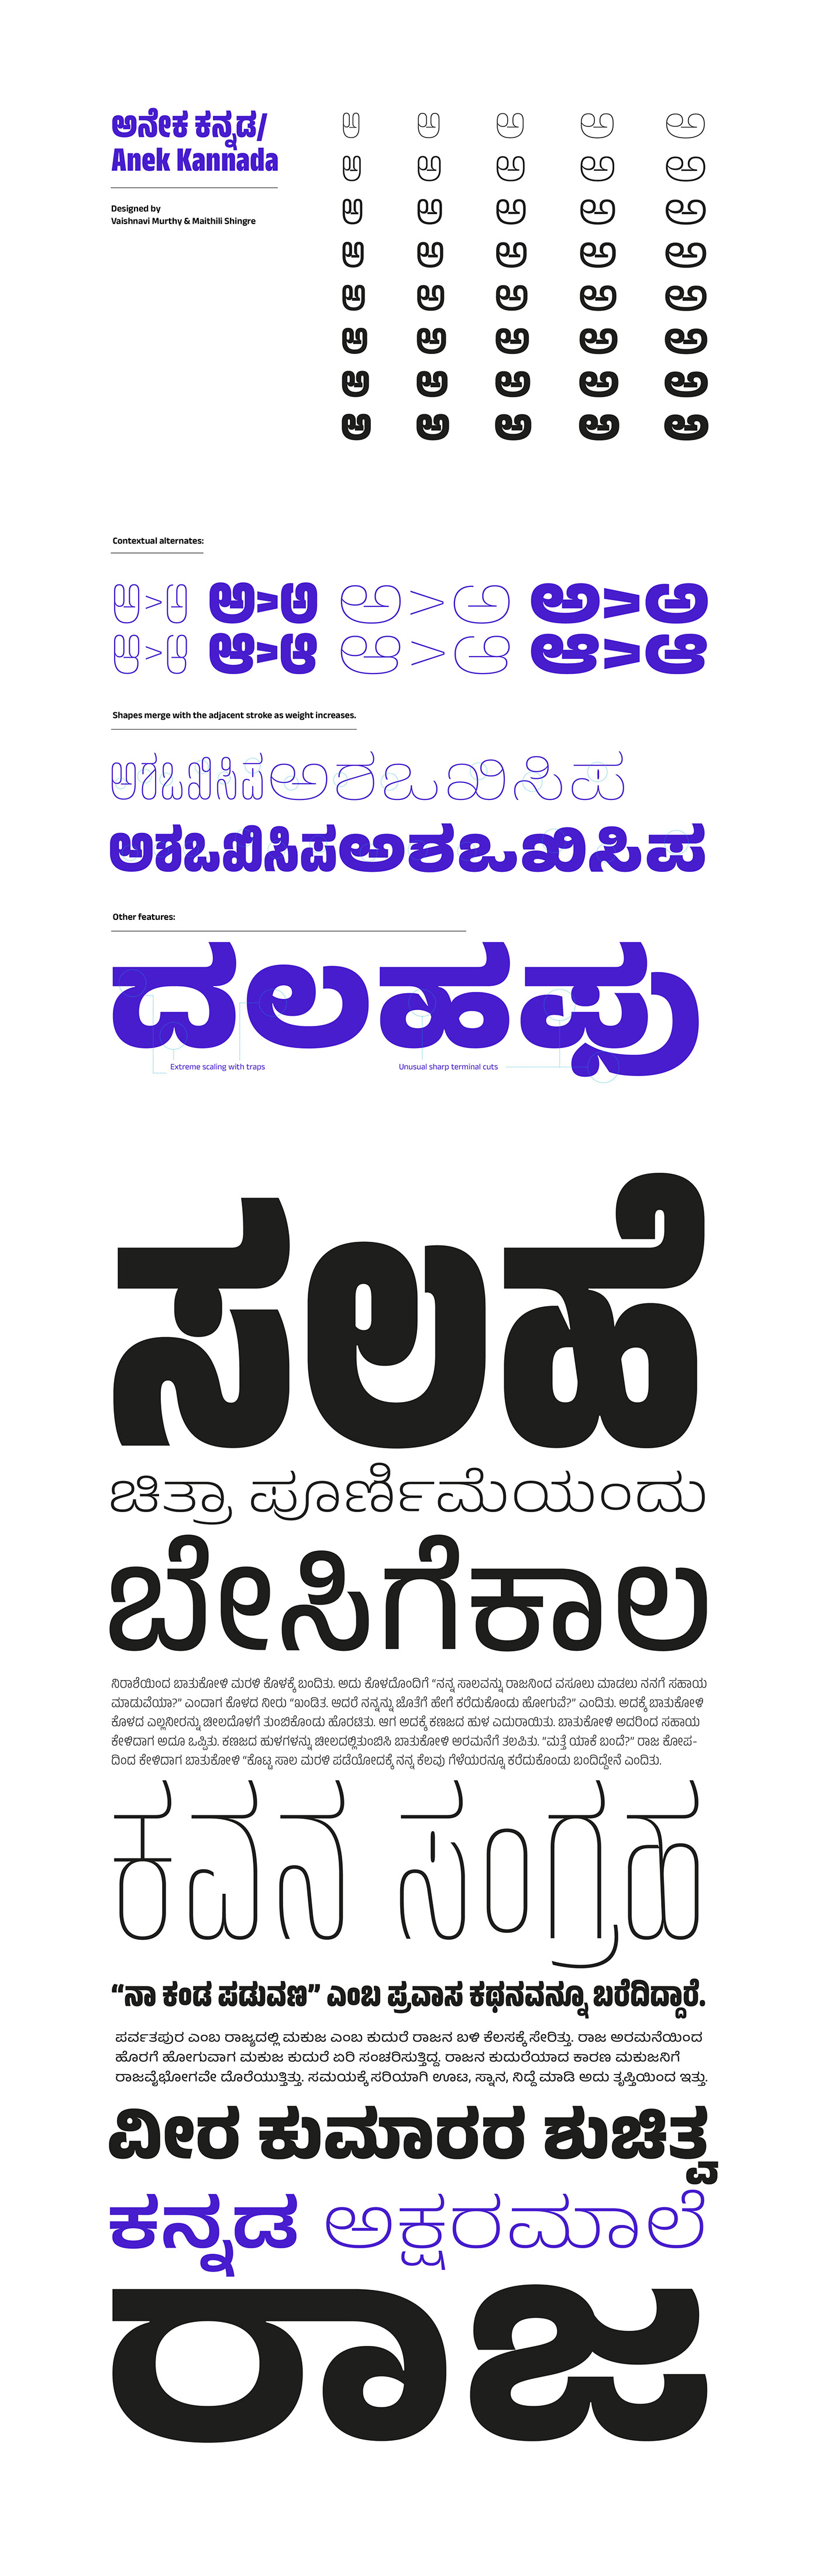 Anek Kannada free Kannada font indic script  kannada Kannada type design Kannada variable font type design typography   variable